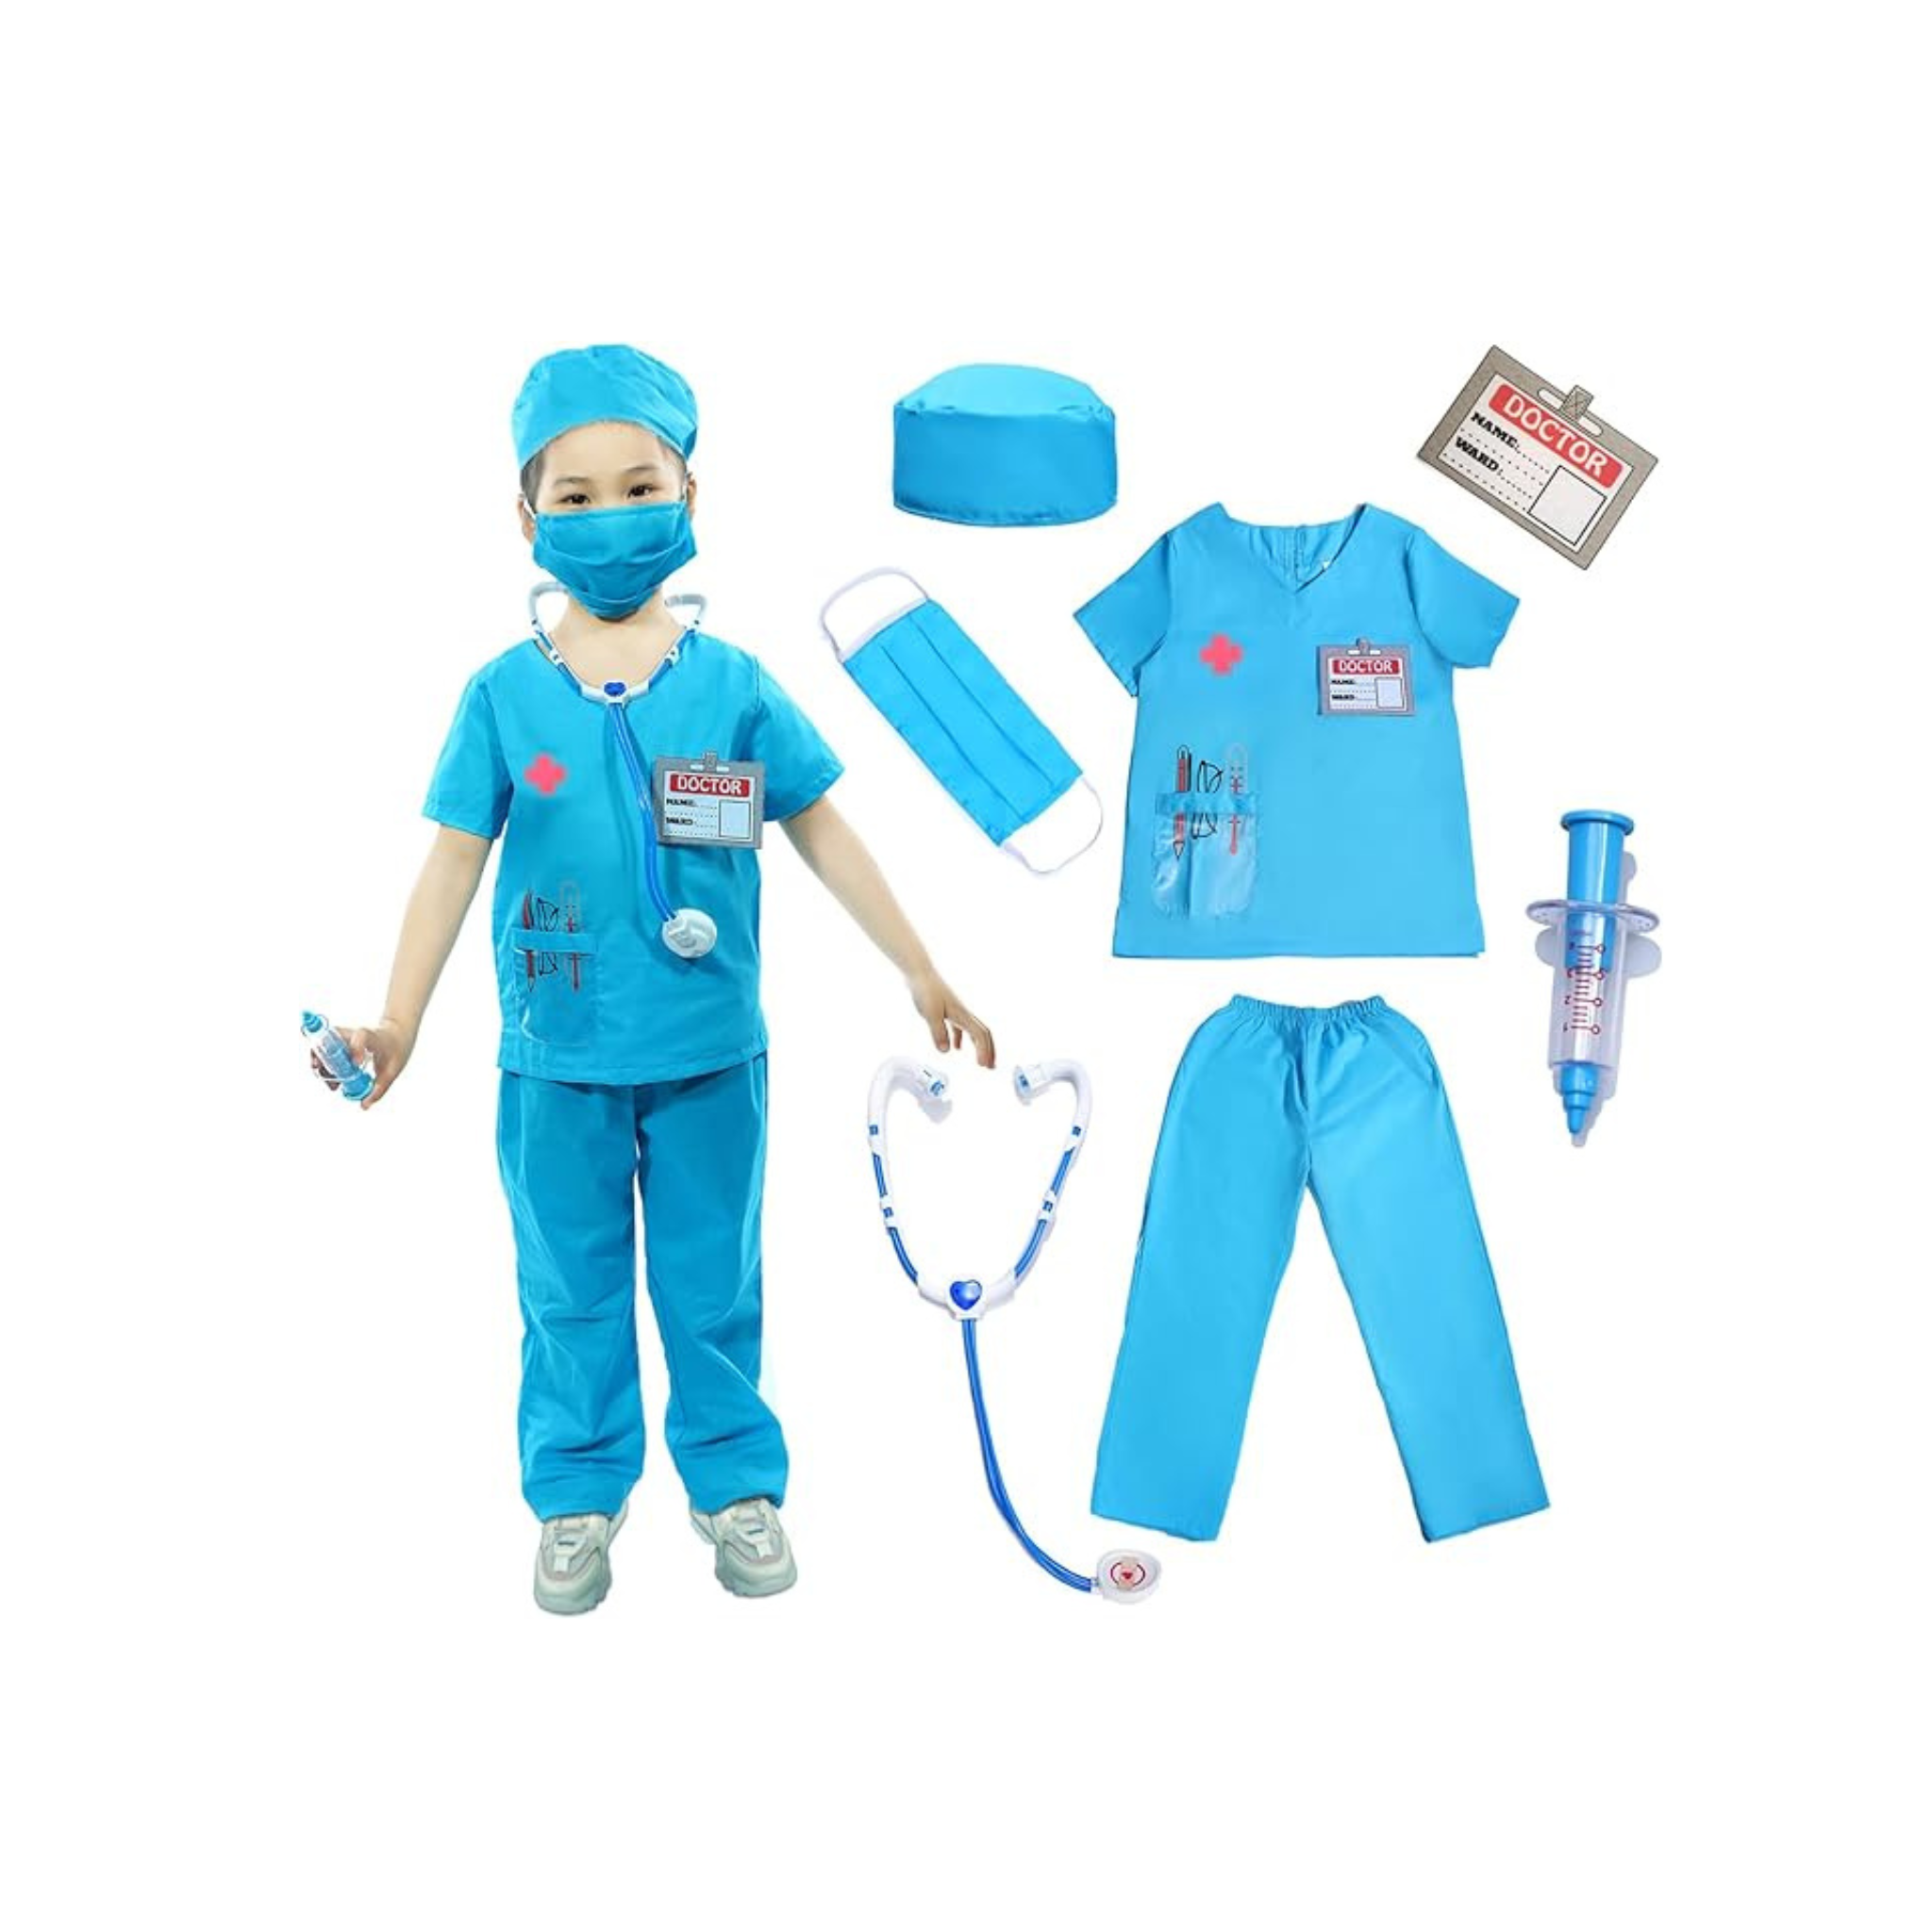 Kids Doctor Costume 7pcs Play Kit